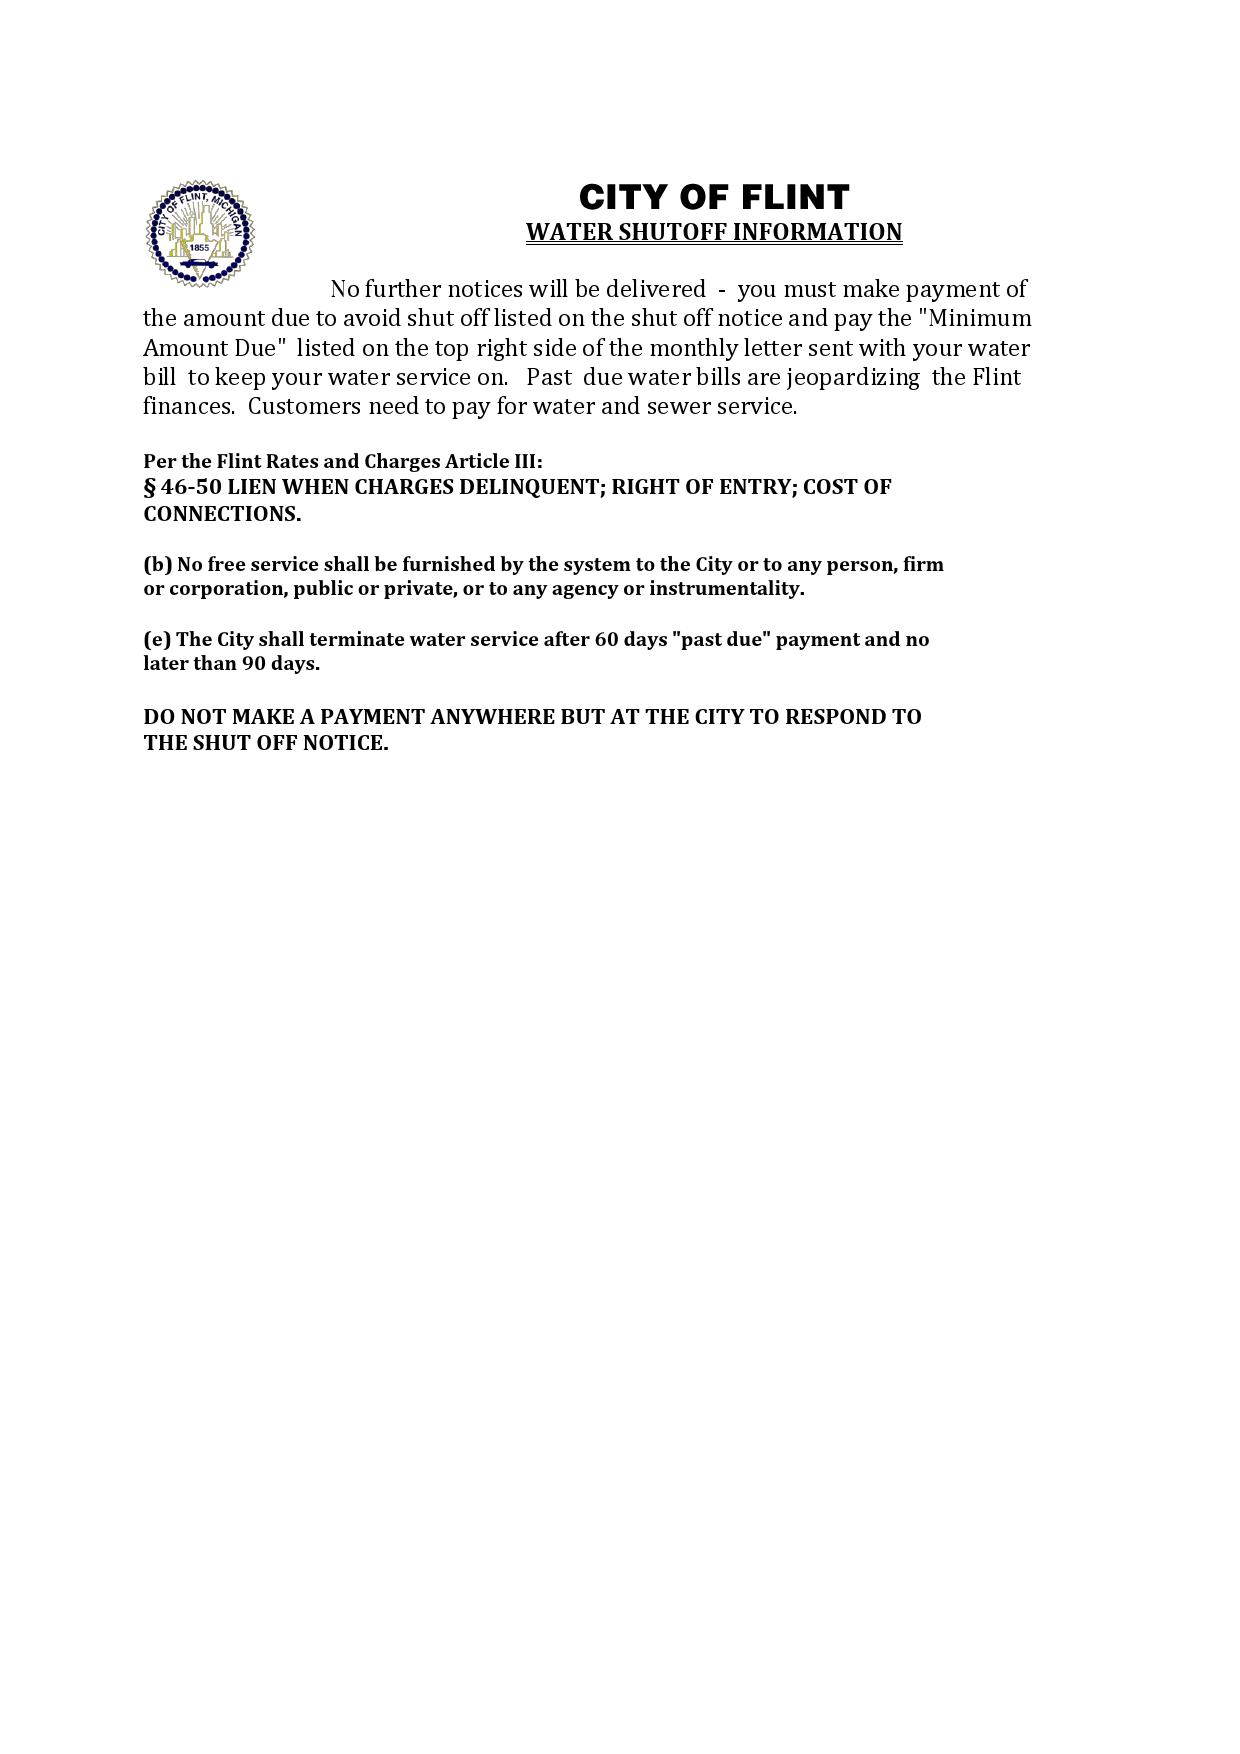 USA City of Flint Michigan water utility bill shutoff notice, Word and PDF template, version 2